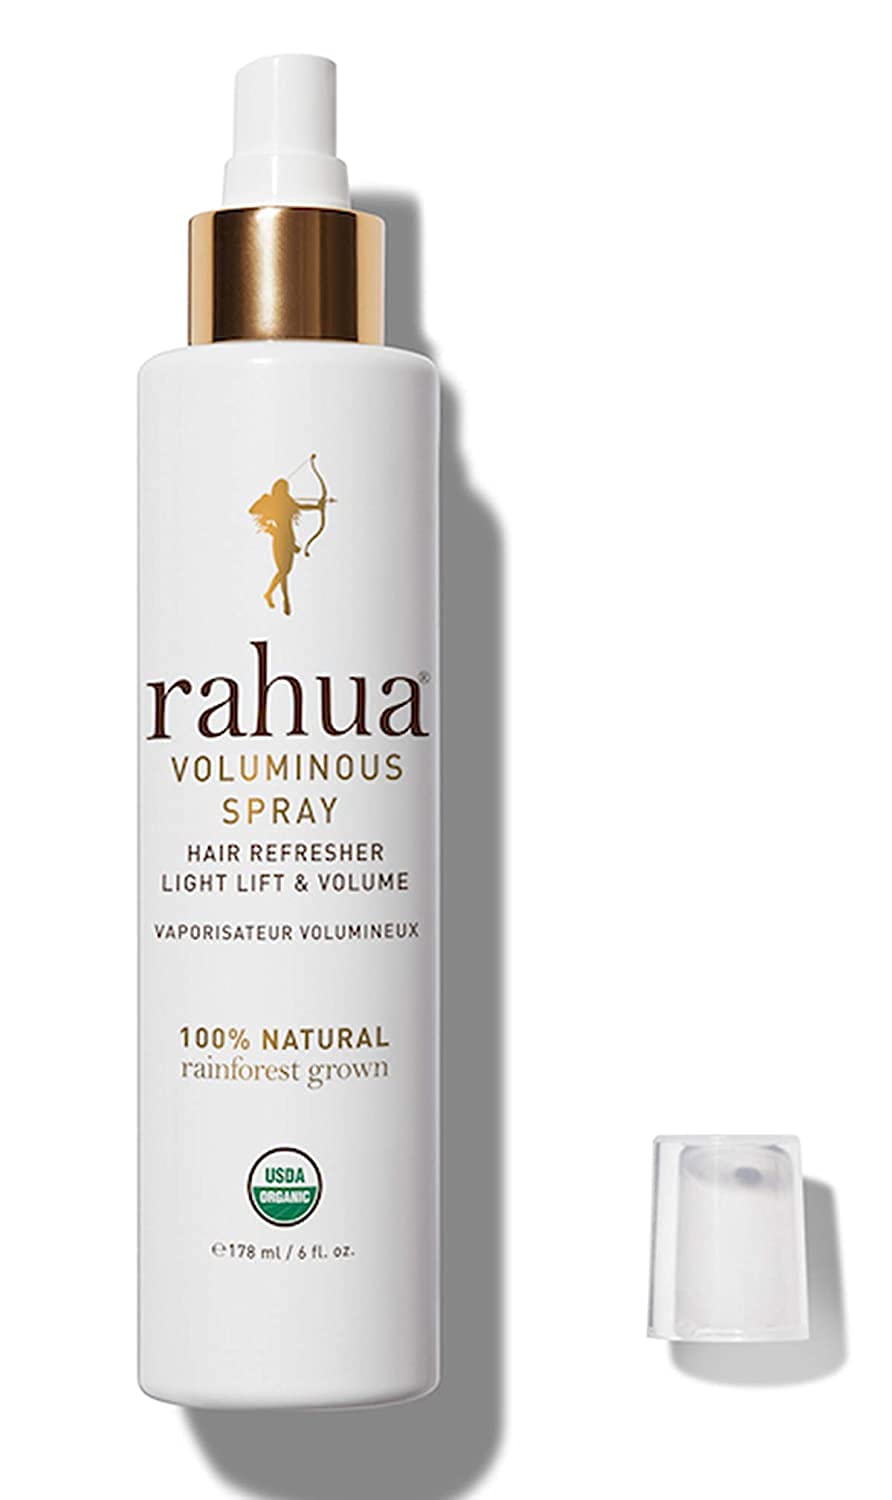 Rahua Voluminous Spray 6 Fl Oz, Scalp and Hair Refresher, Light Lift & Volume, 100% Natural Rainforest Grown, Hair Spray with Fresh, Natural Lavender, and Eucalyptus Aroma